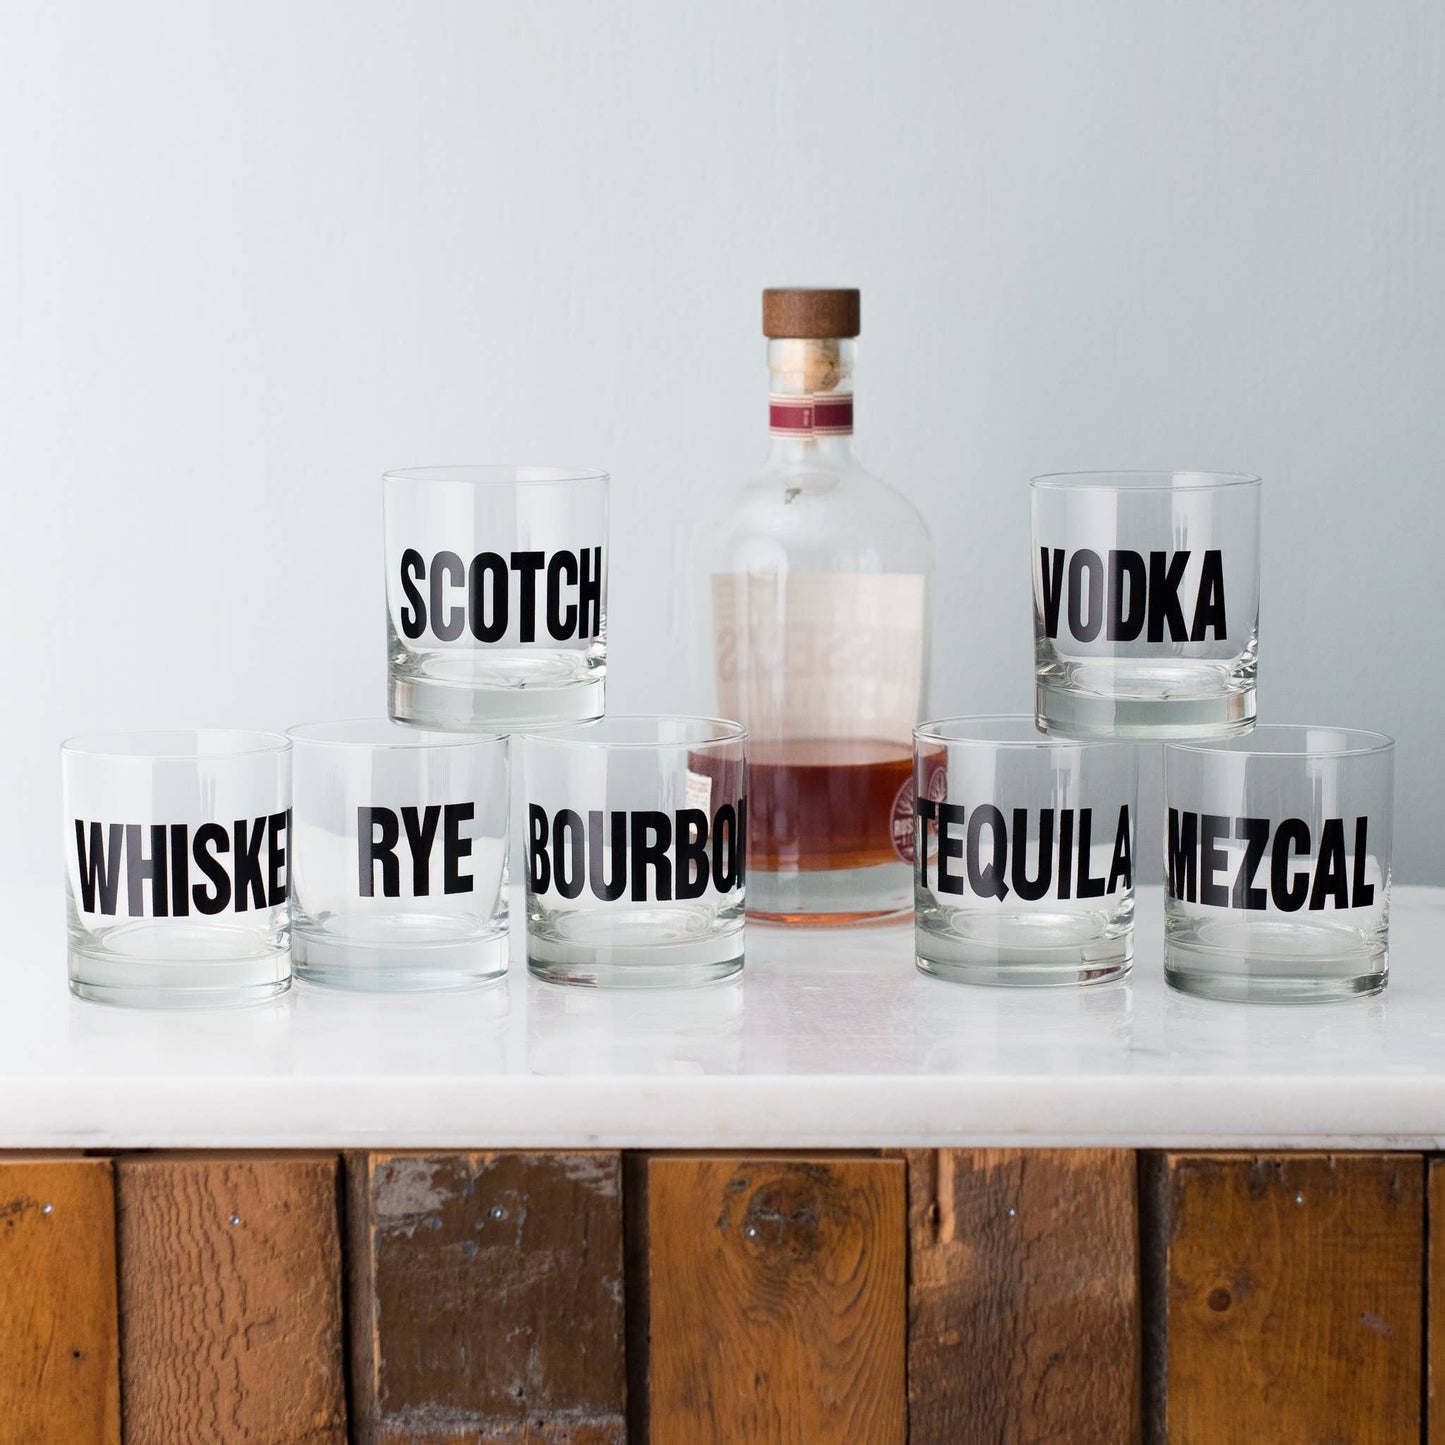 Mixology Rocks Glass: Bourbon